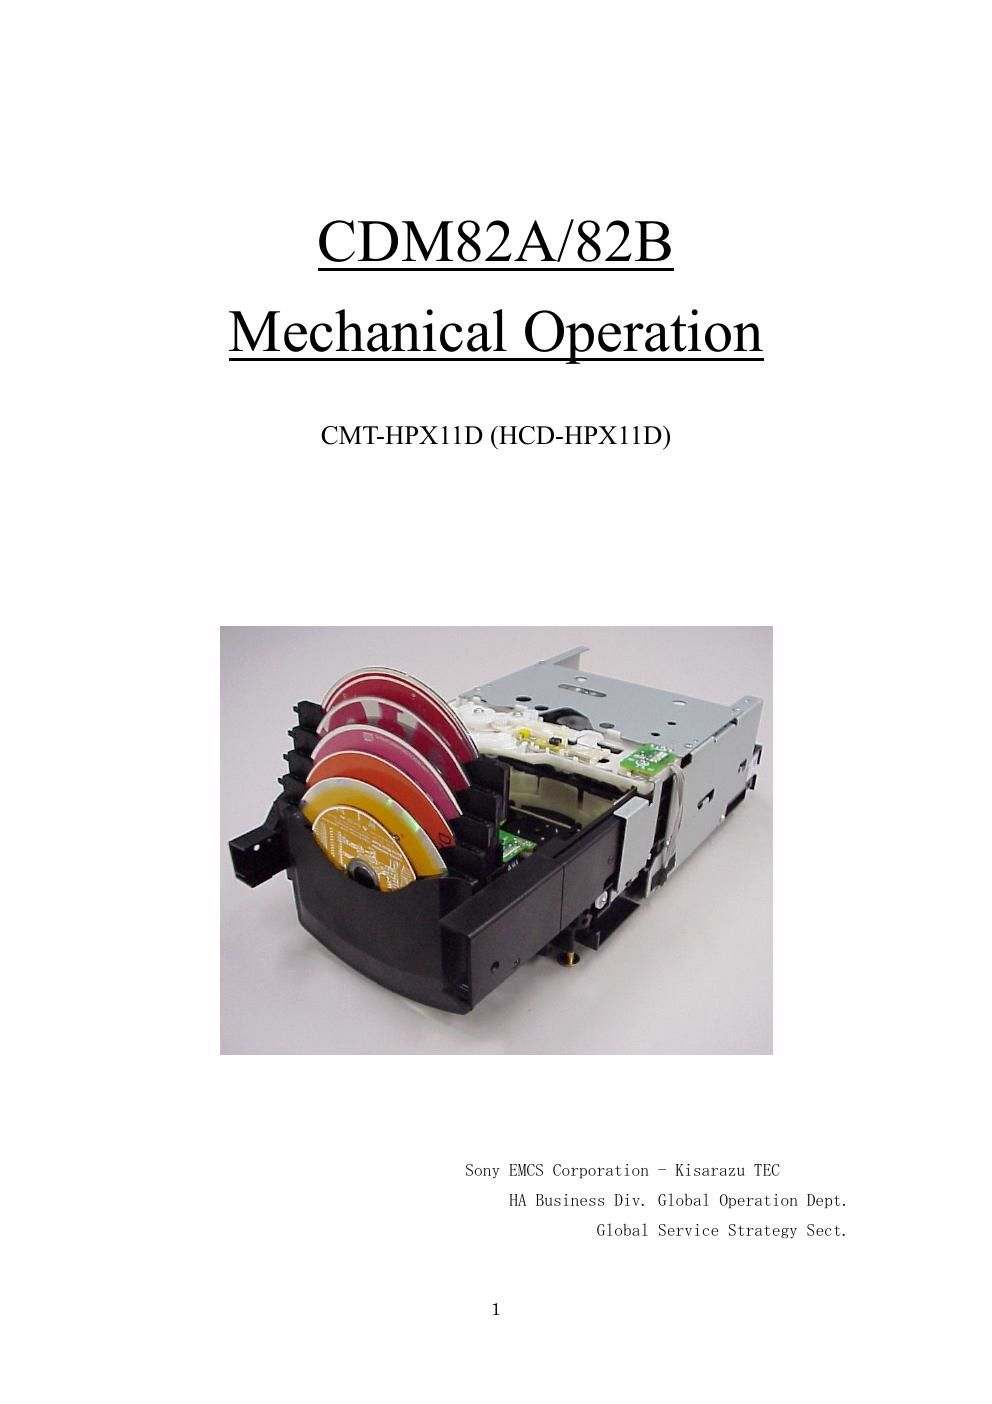 sony cdm 82 owners manual